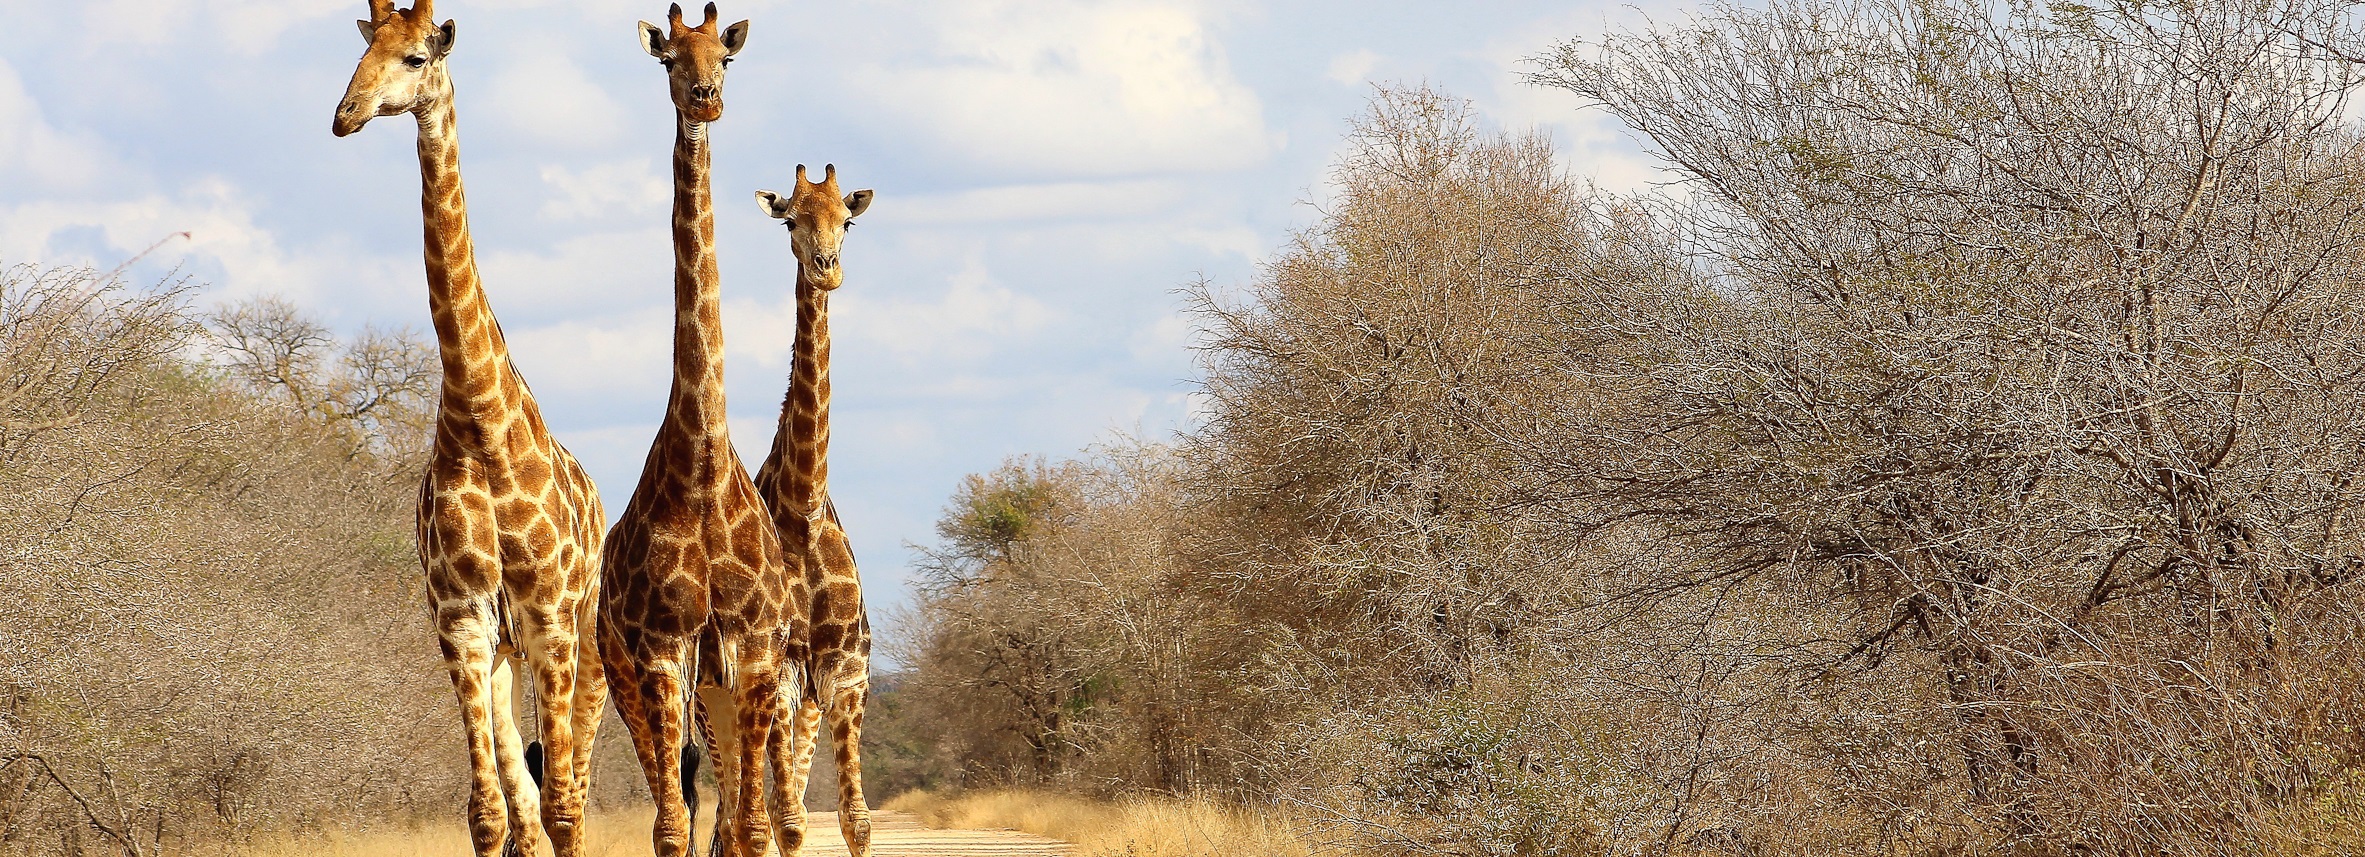 Safari mit Giraffen 